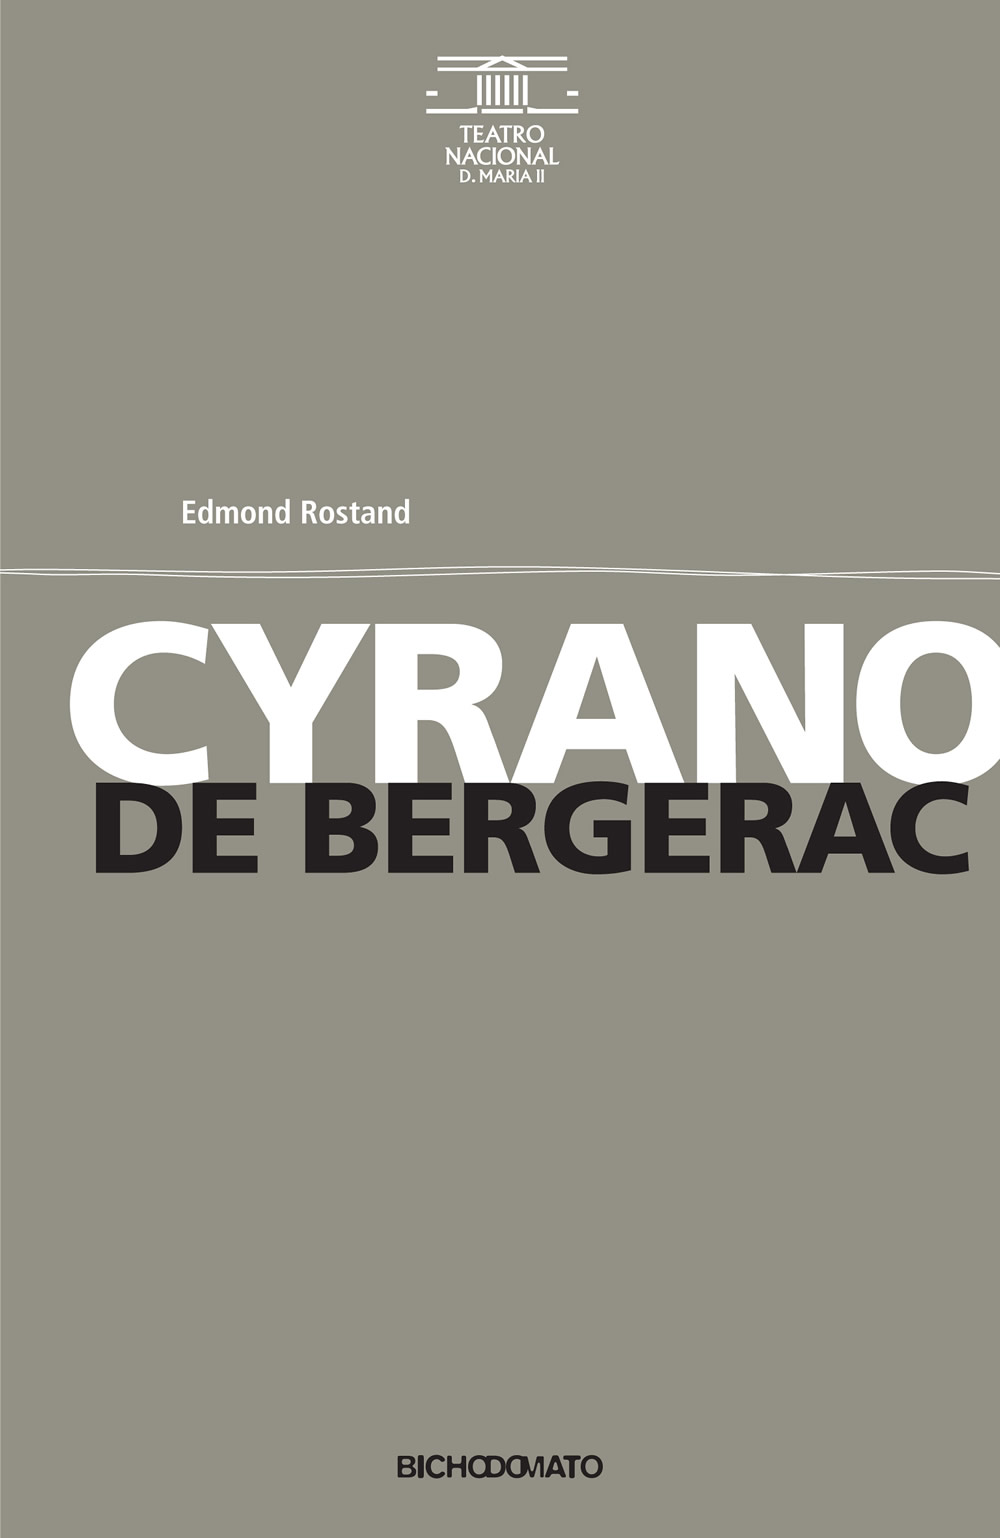 Capa: Cyrano de Bergerac